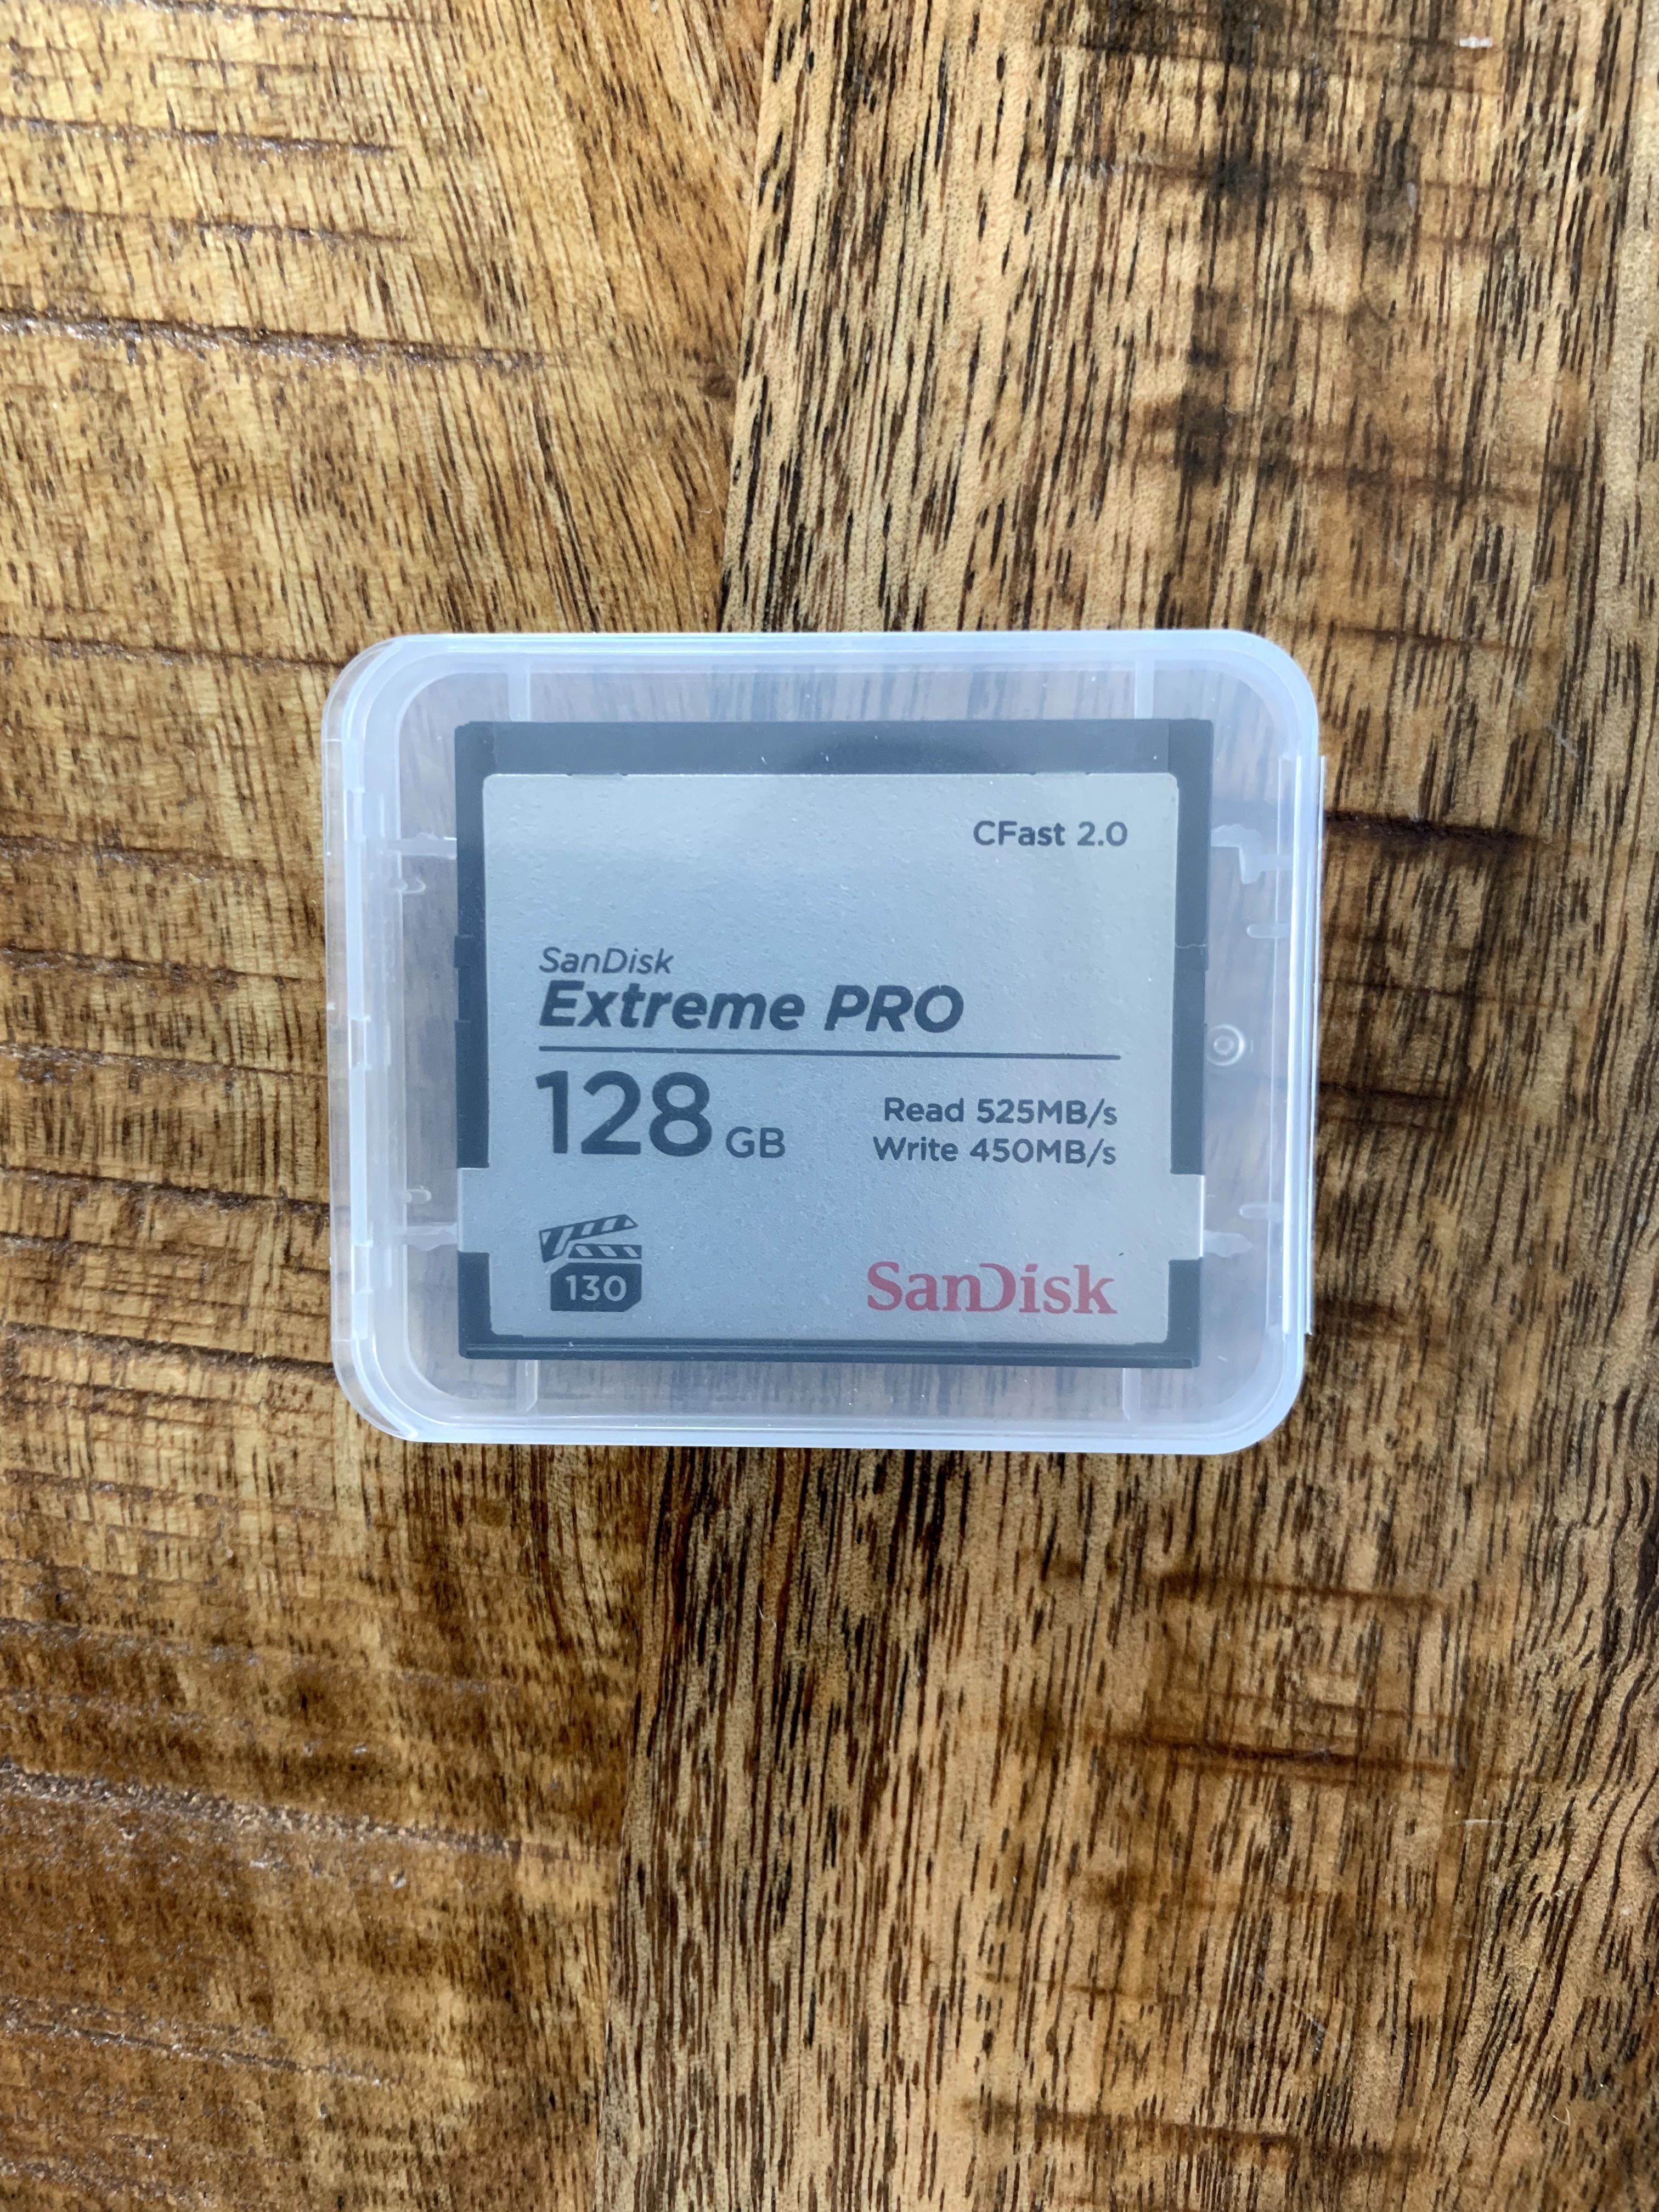 Karta Sandisk Extreme Pro CFAST 2.0 128 GB